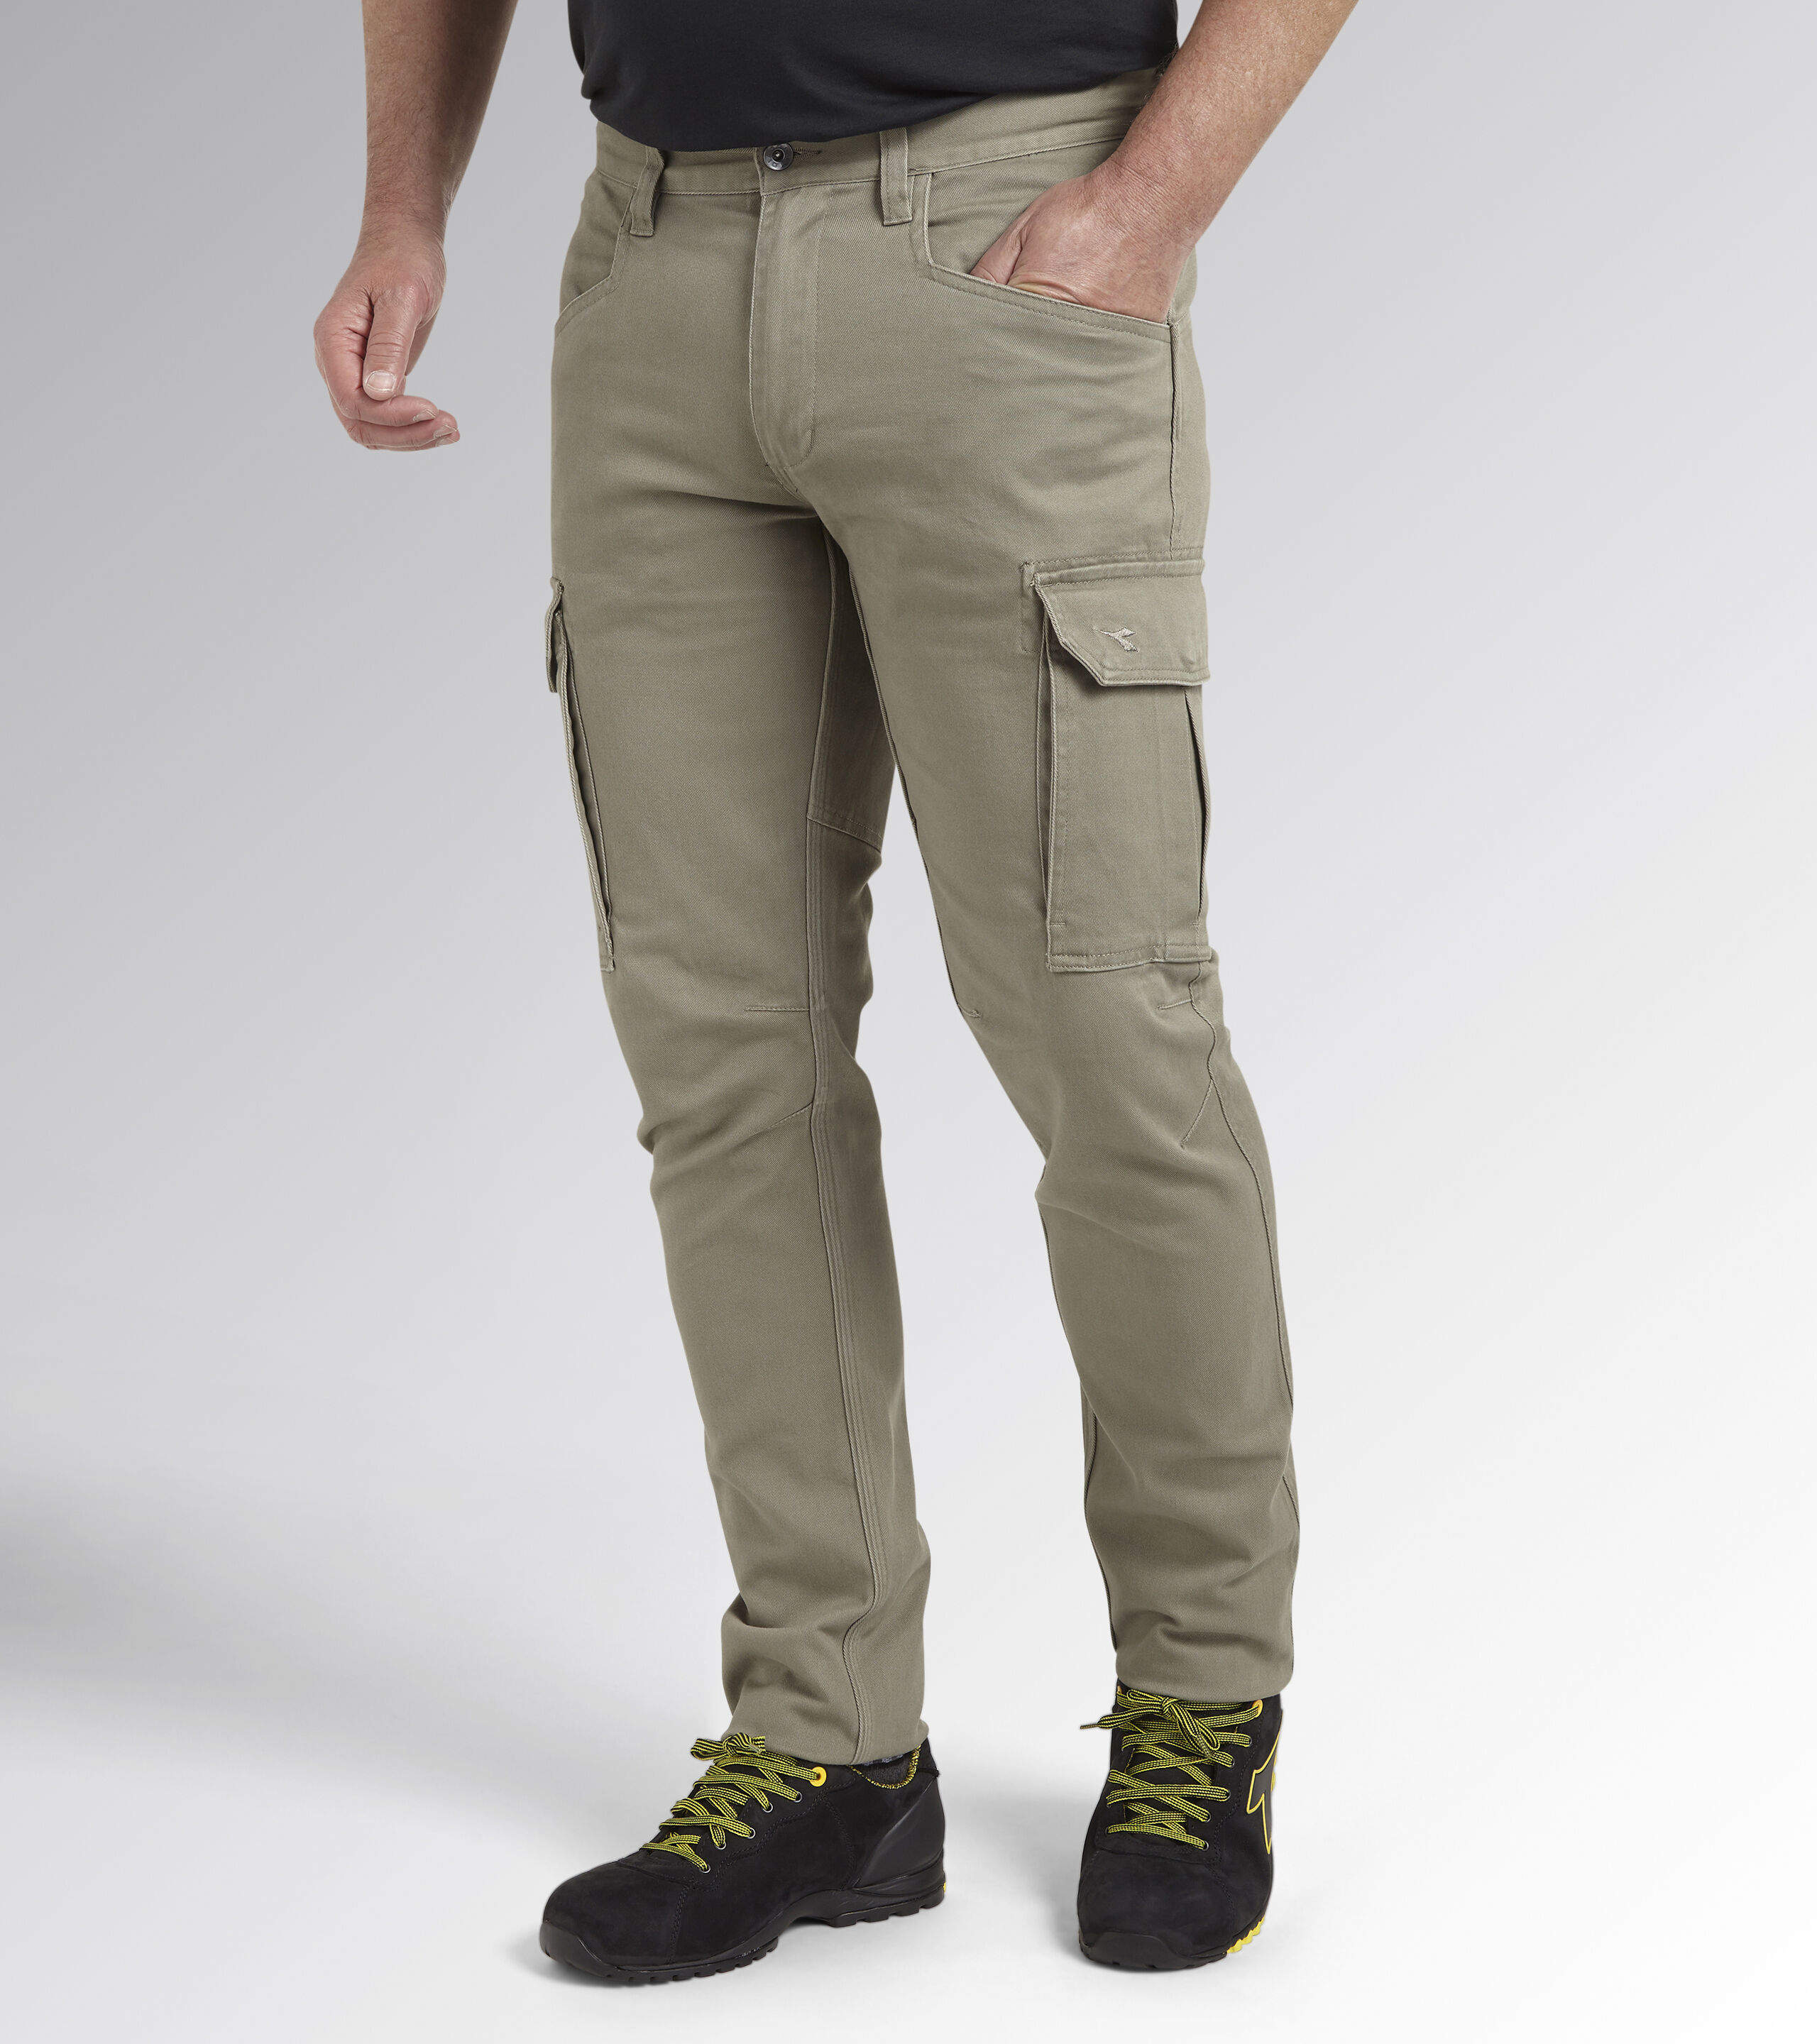 2023 New Year Reset,AXXD Cargo Trousers Work Wear Cargo 6 Pocket Full Pants  Clearance Mens Beach Pants Army Green 4XL - Walmart.com